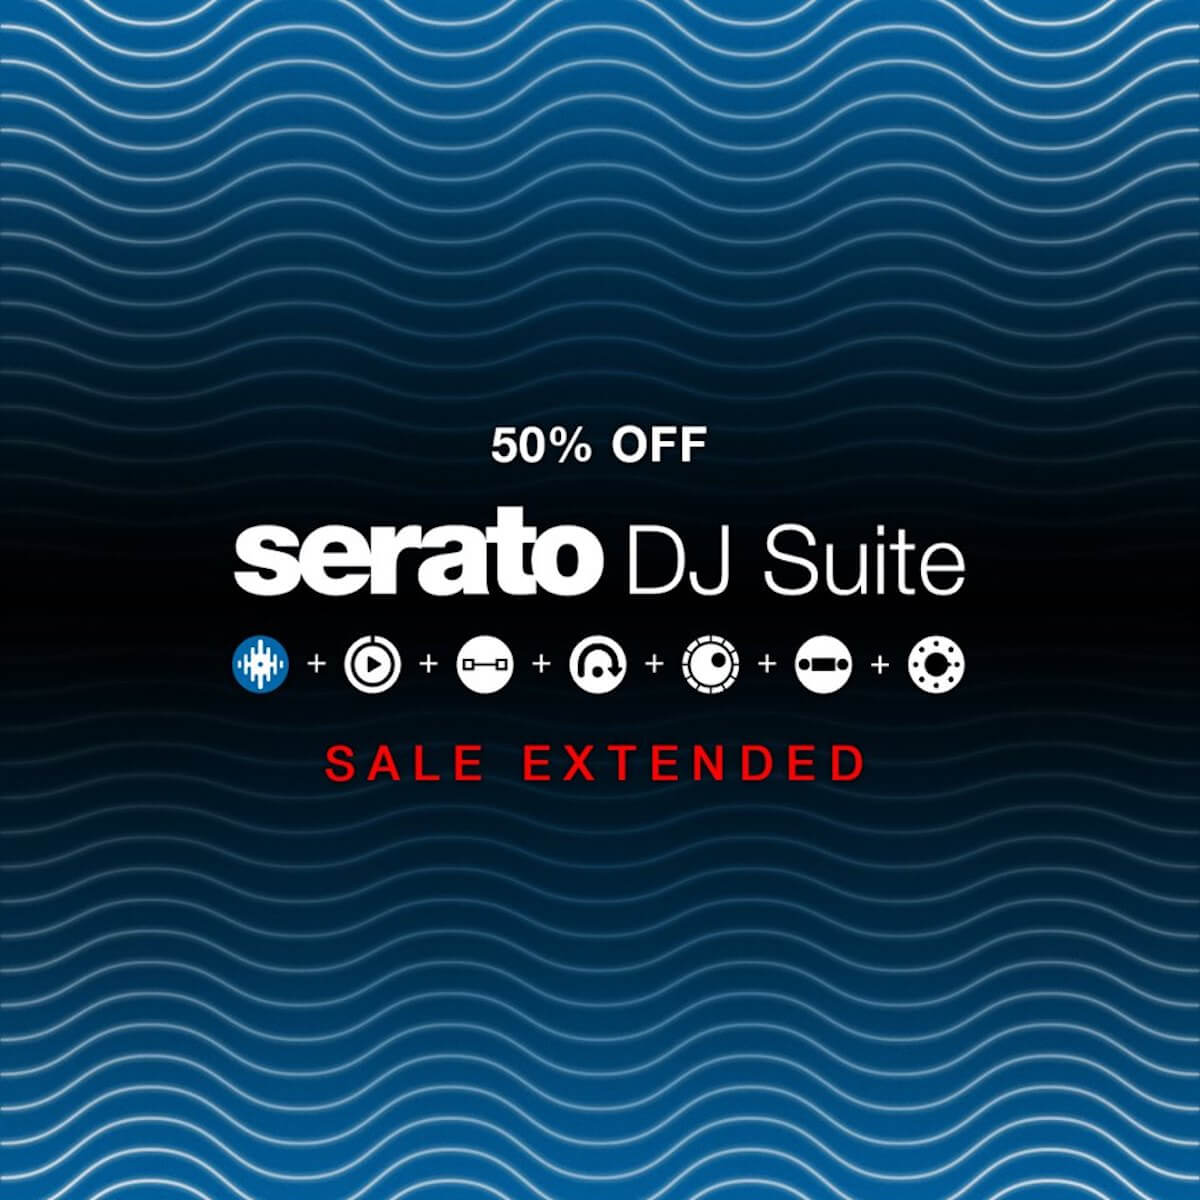 「Serato DJ Suite」5月30日まで期間限定半額セール！「Serato DJ Pro」「Serato Video」などがオールインワンに technology190528seratodjsuite_main